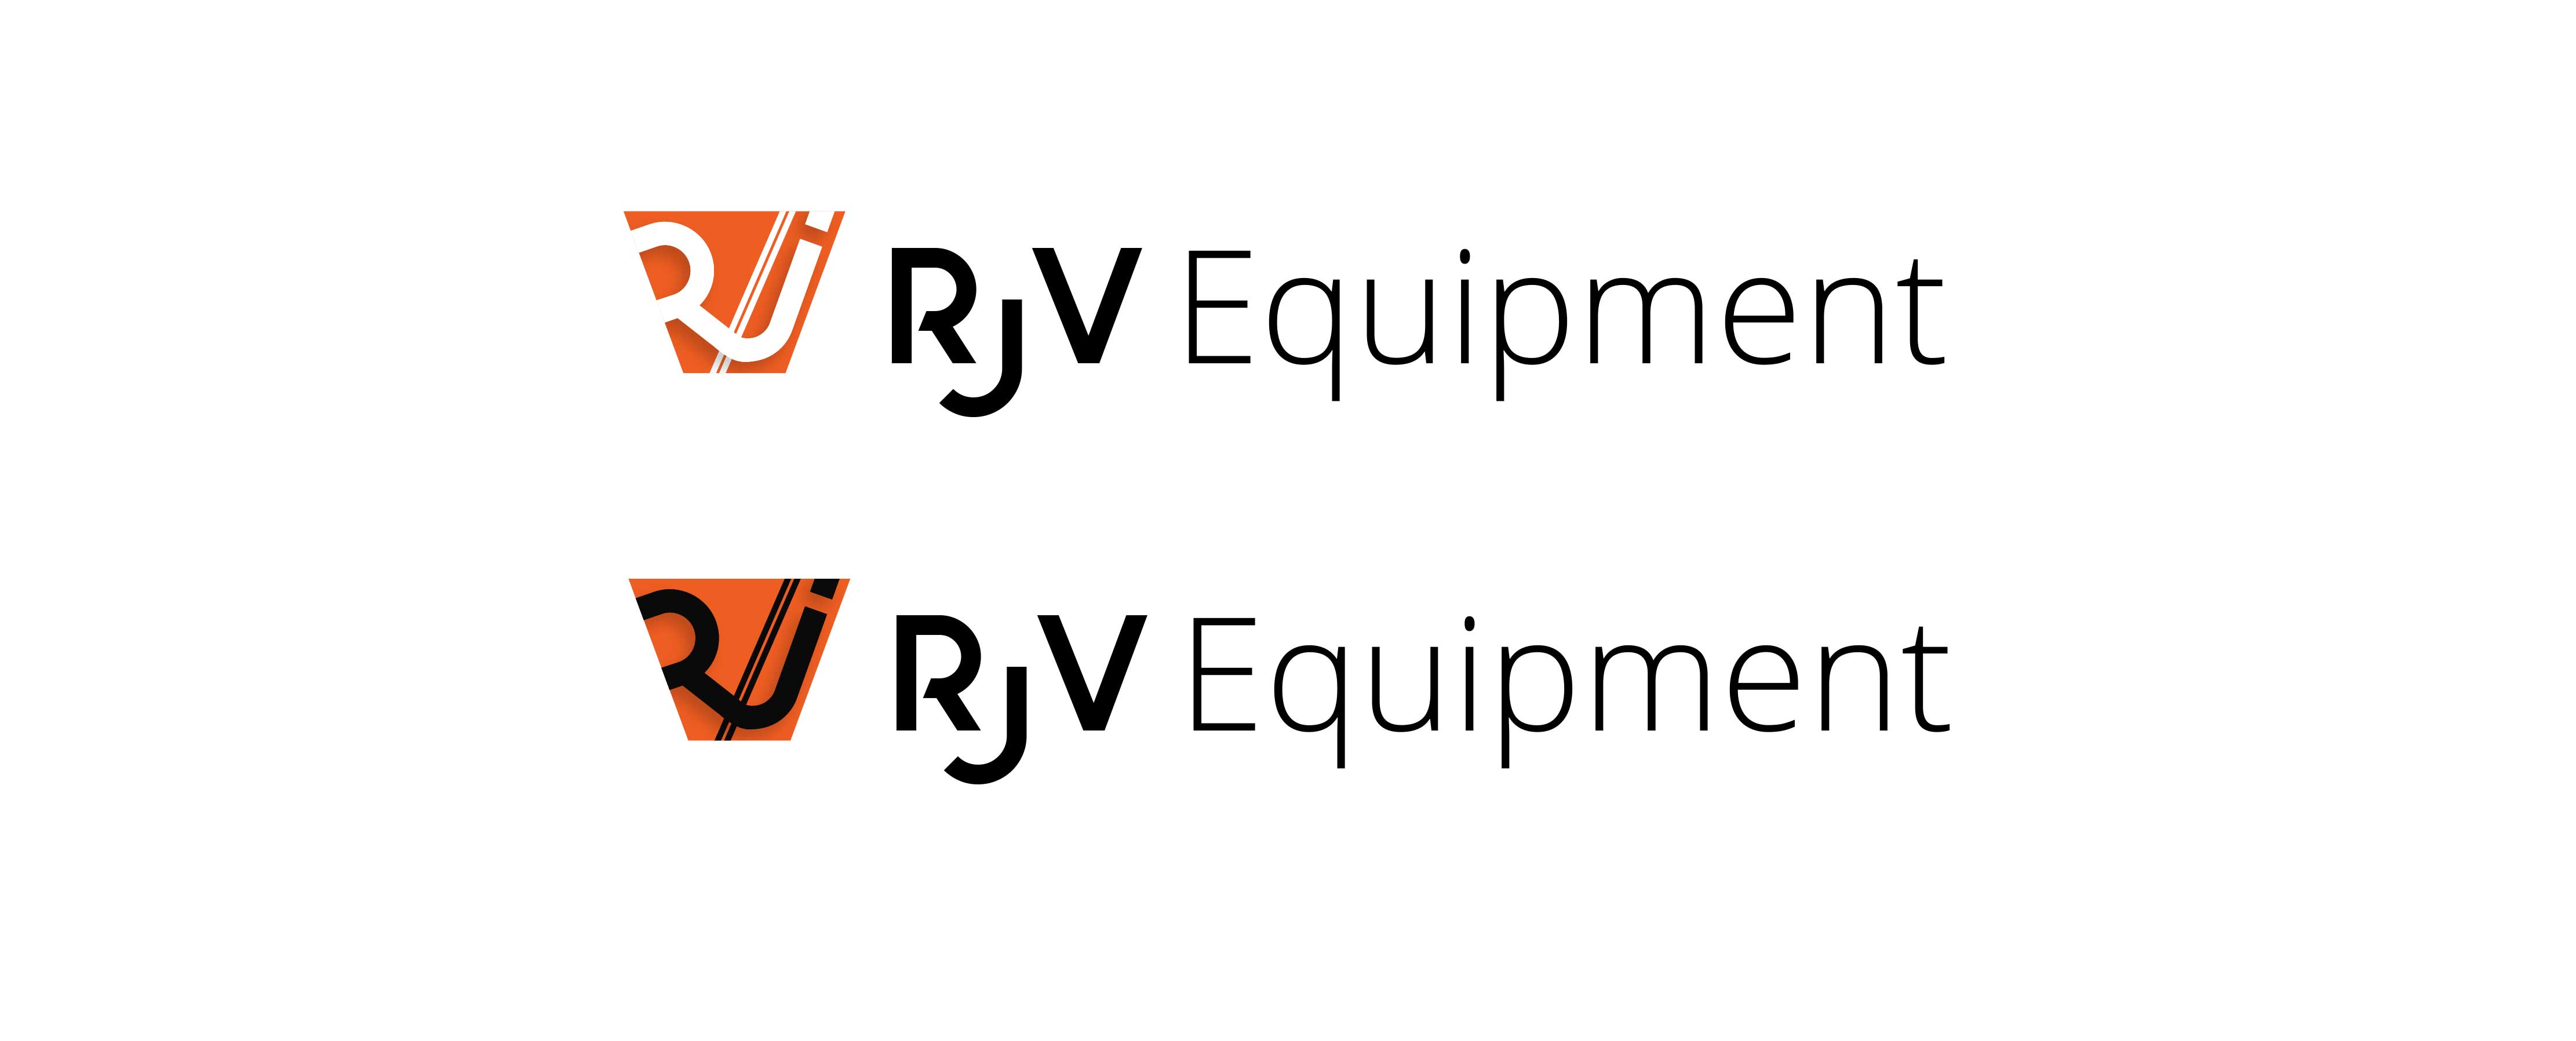 RJV Logo Design